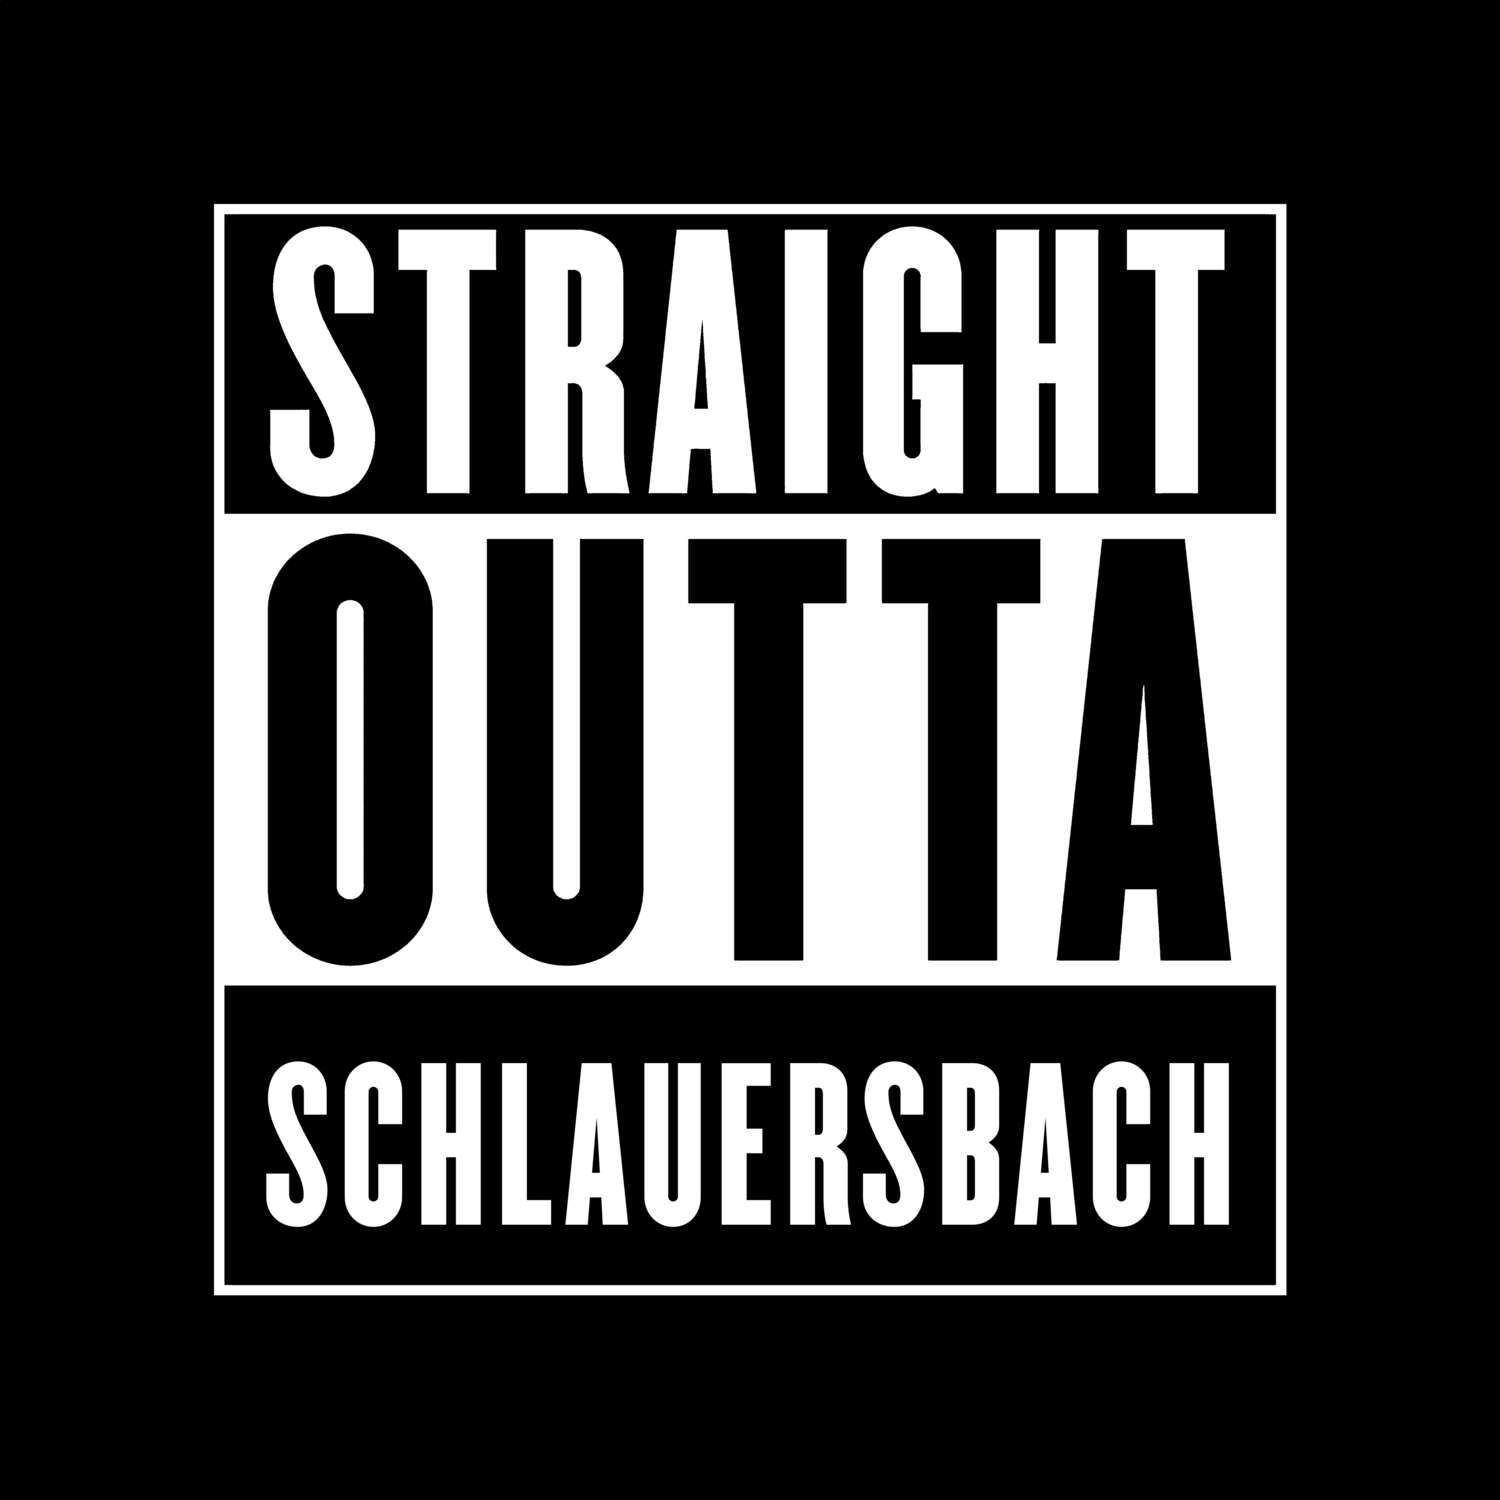 Schlauersbach T-Shirt »Straight Outta«